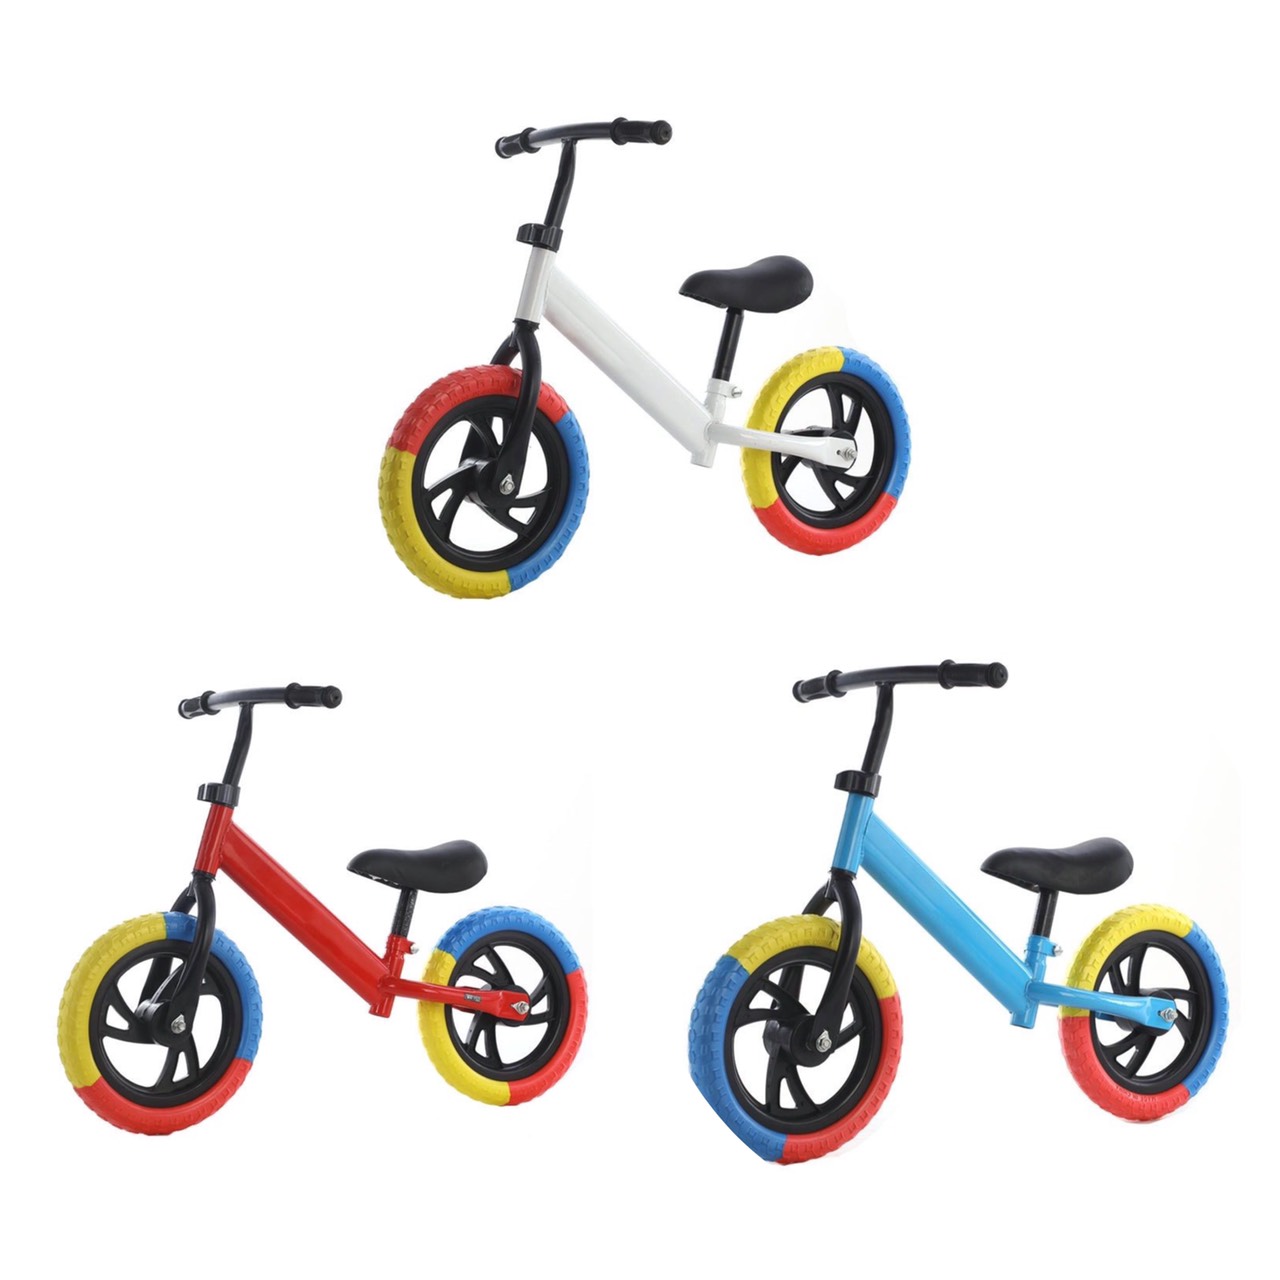 1-6 years old kids luxury balance bike, 2 wheel bicycle baby legs